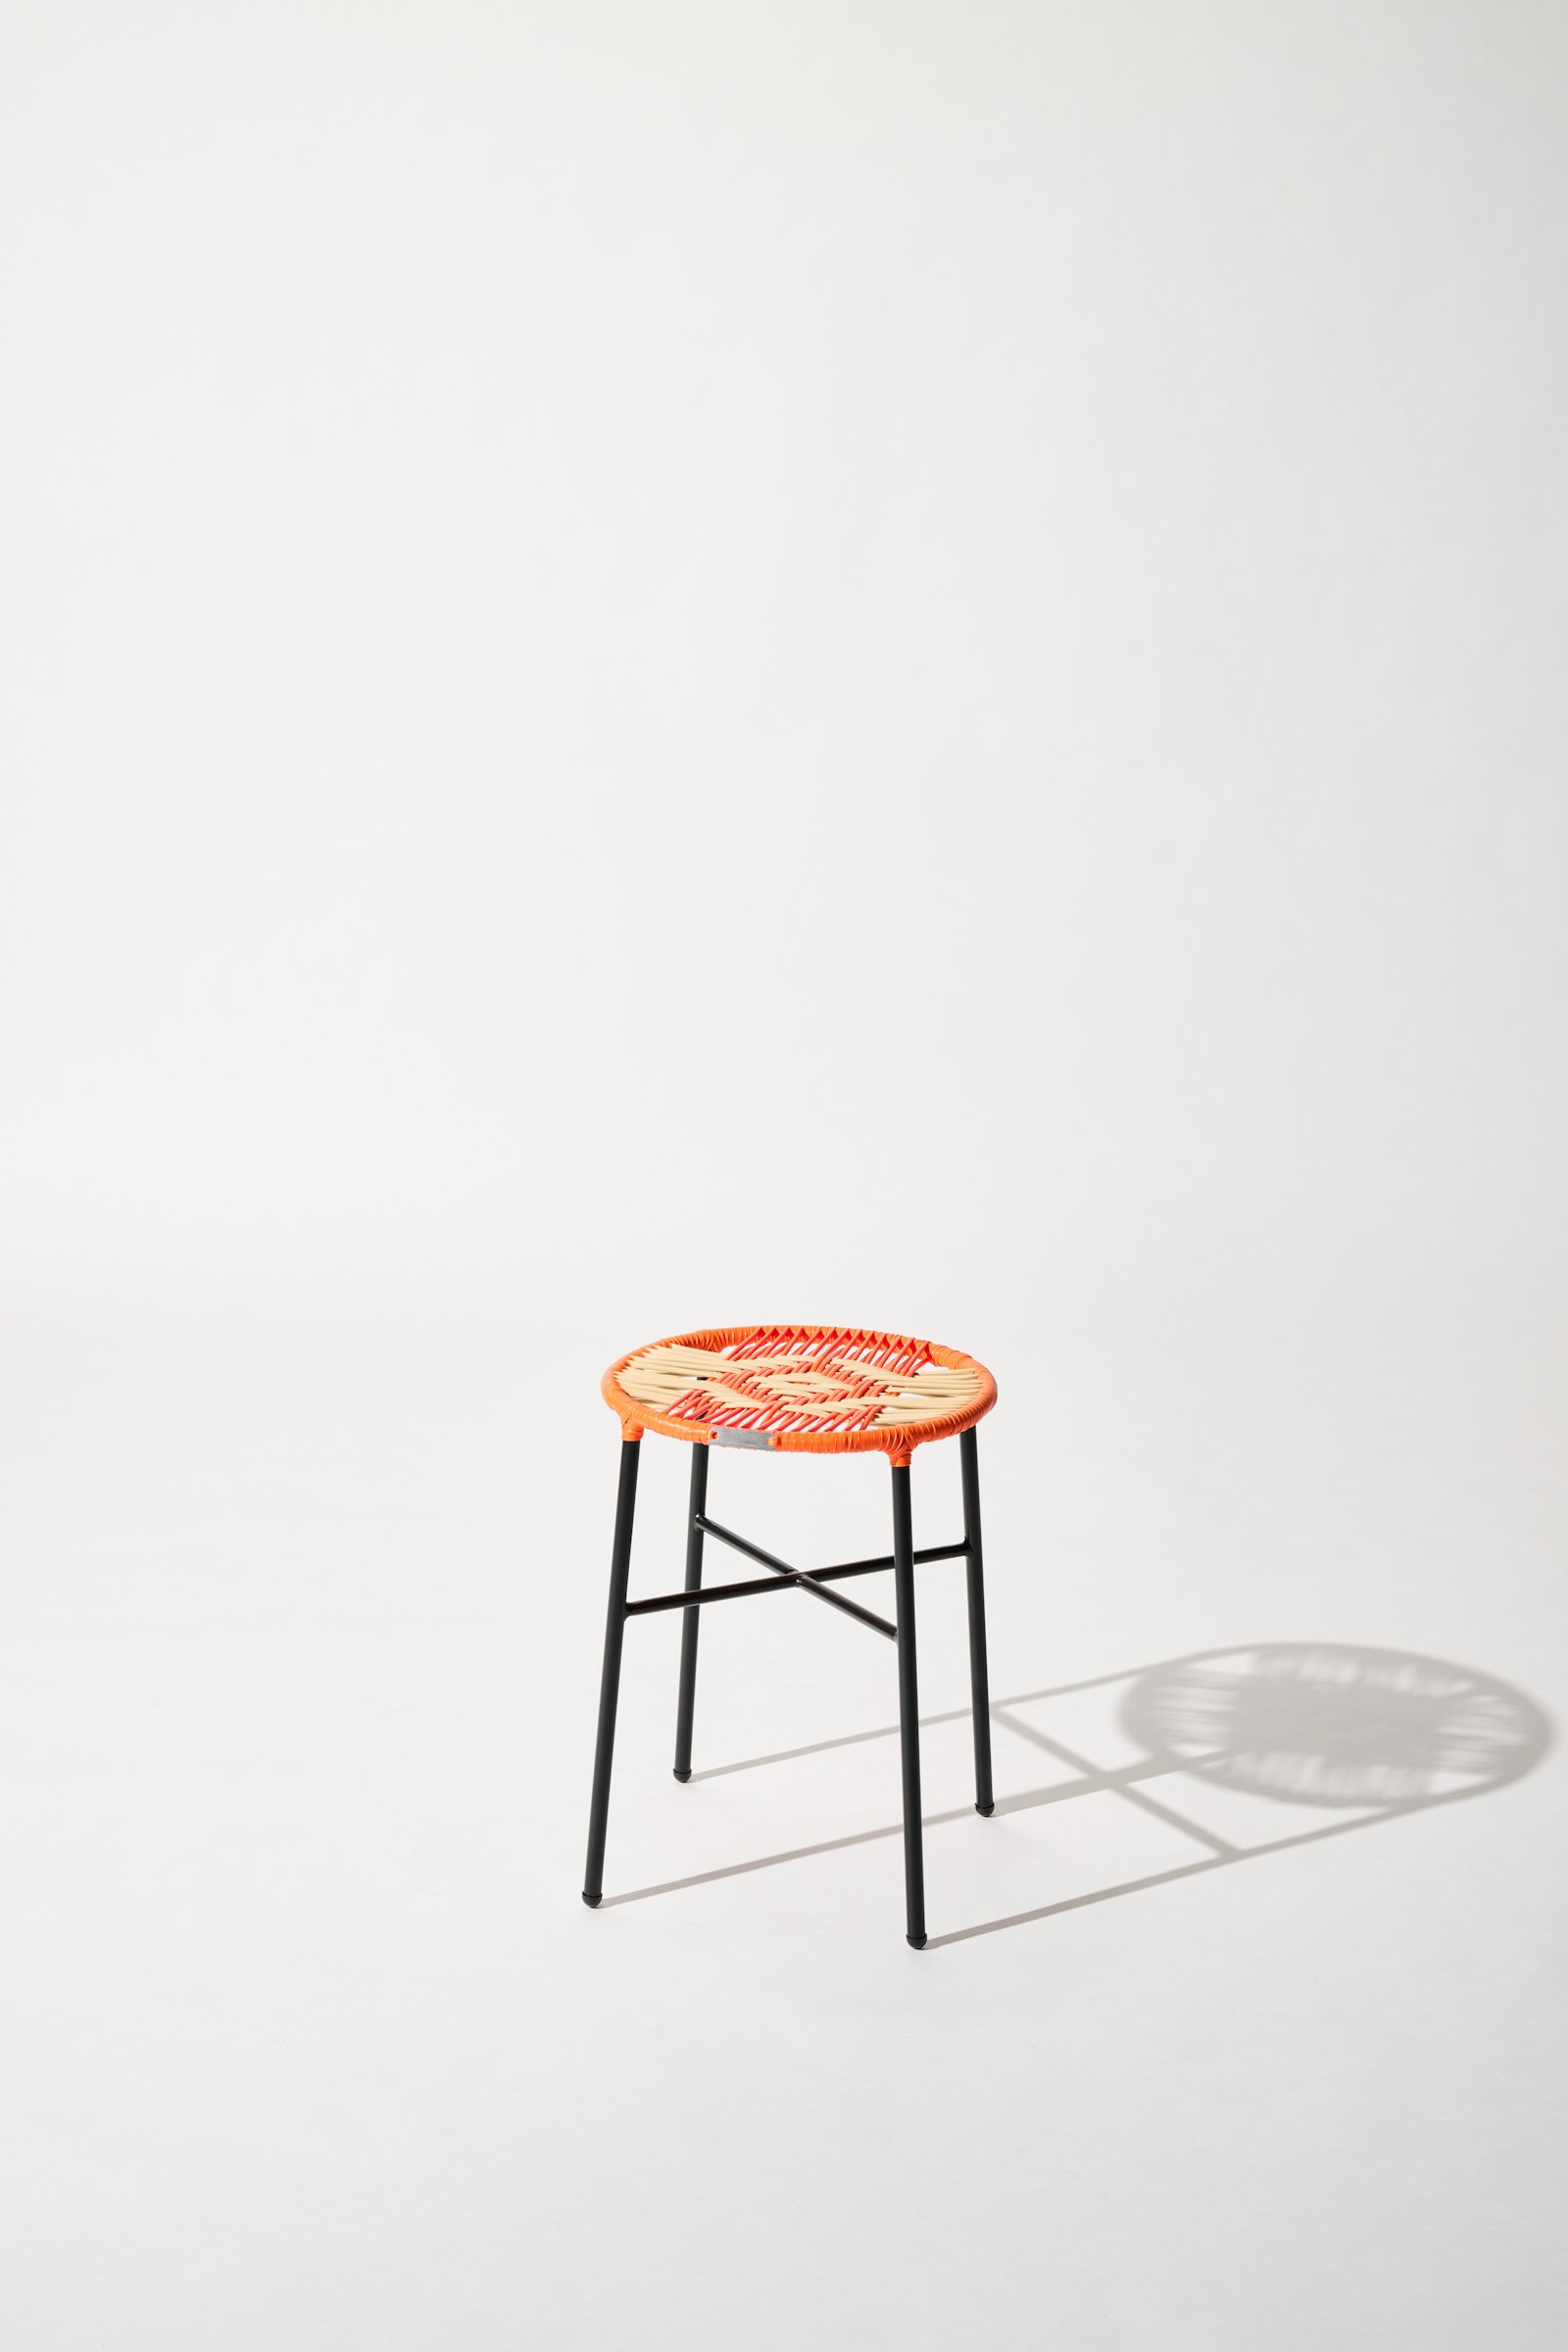 Dorothee Schumacher Handwoven stool mix rojo vino/orange